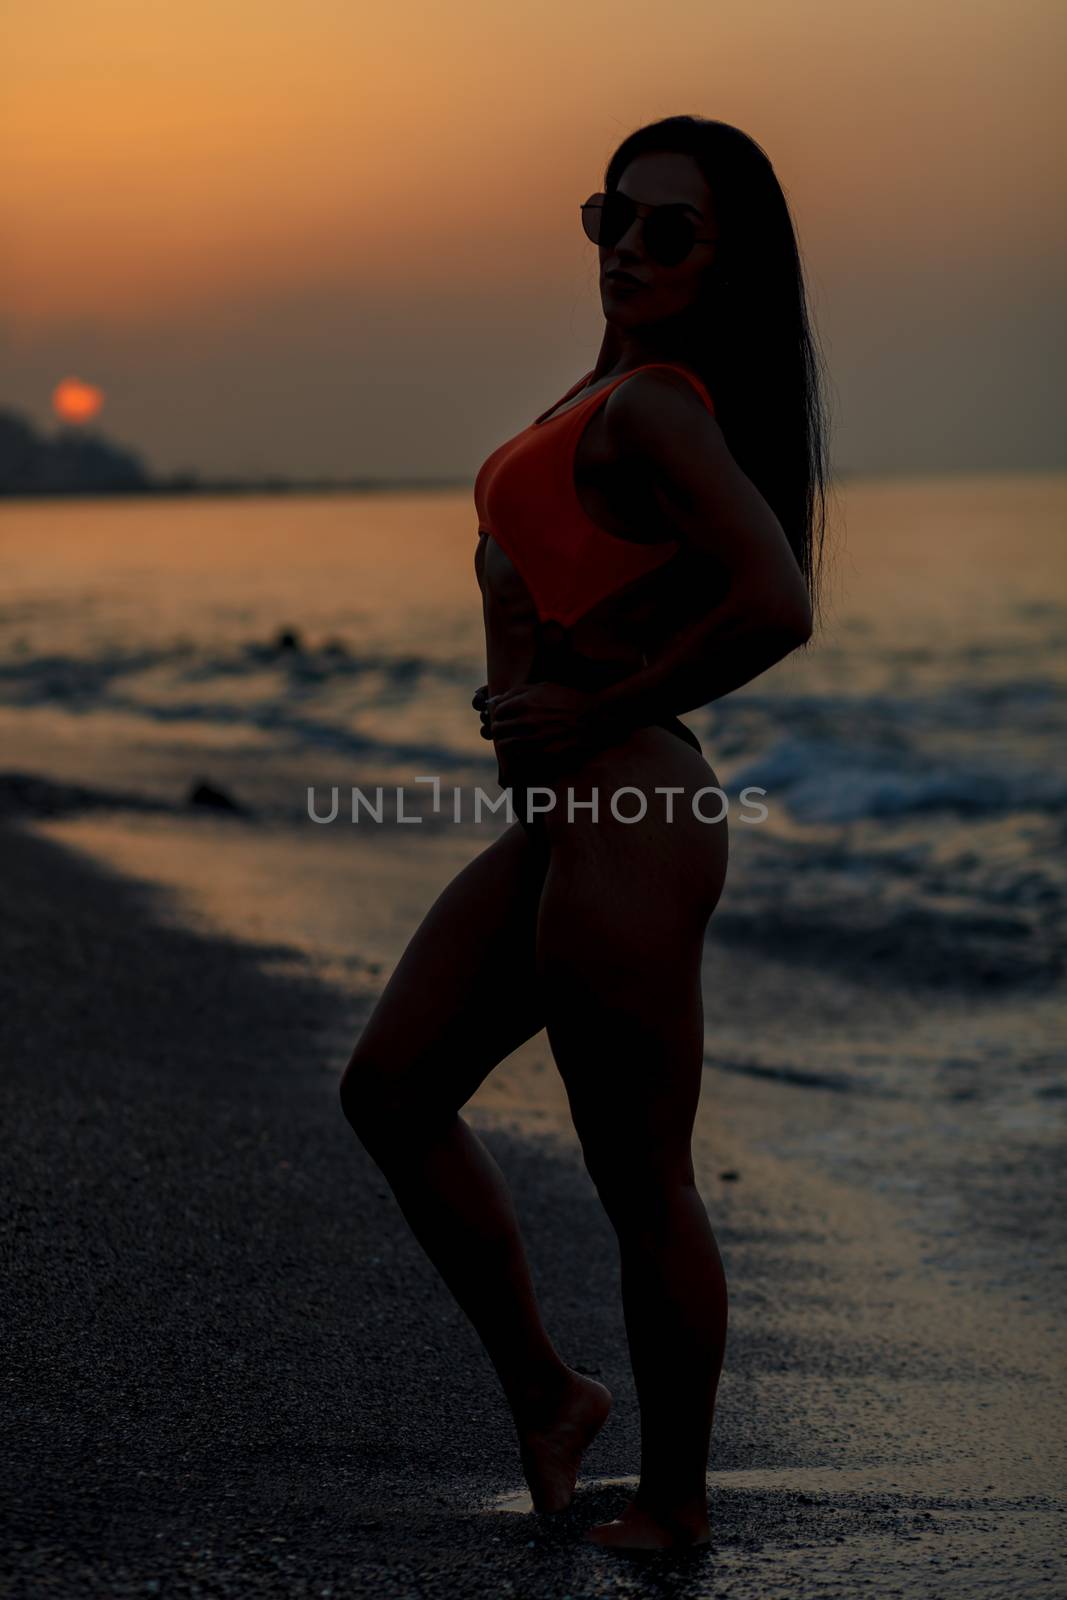 Fitness girl posing with a beautiful black and orange bikini by viledevil